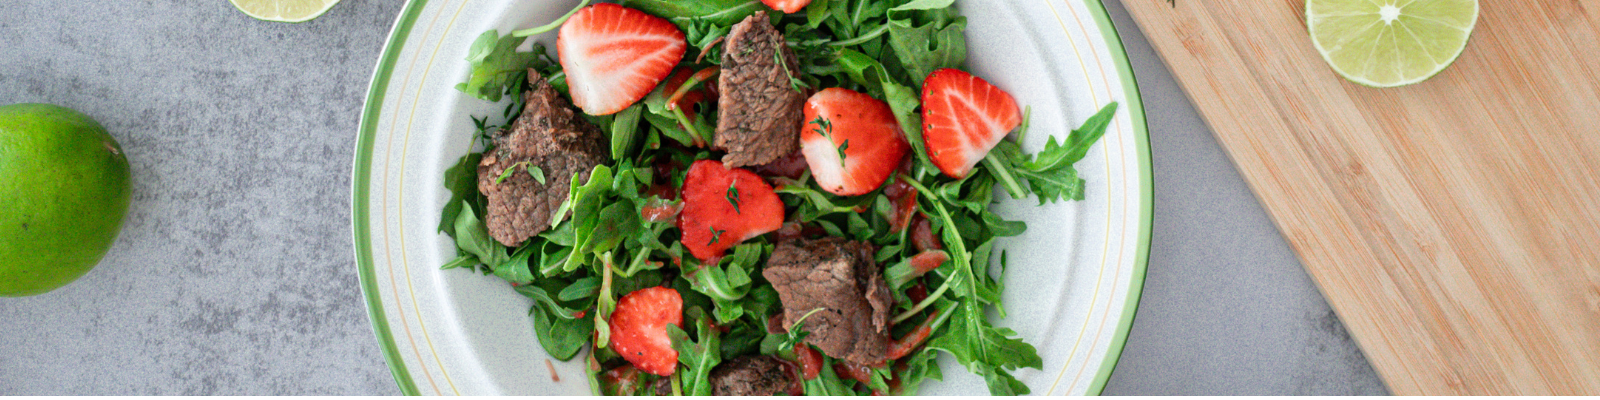 Oven Roast Strawberry Salad